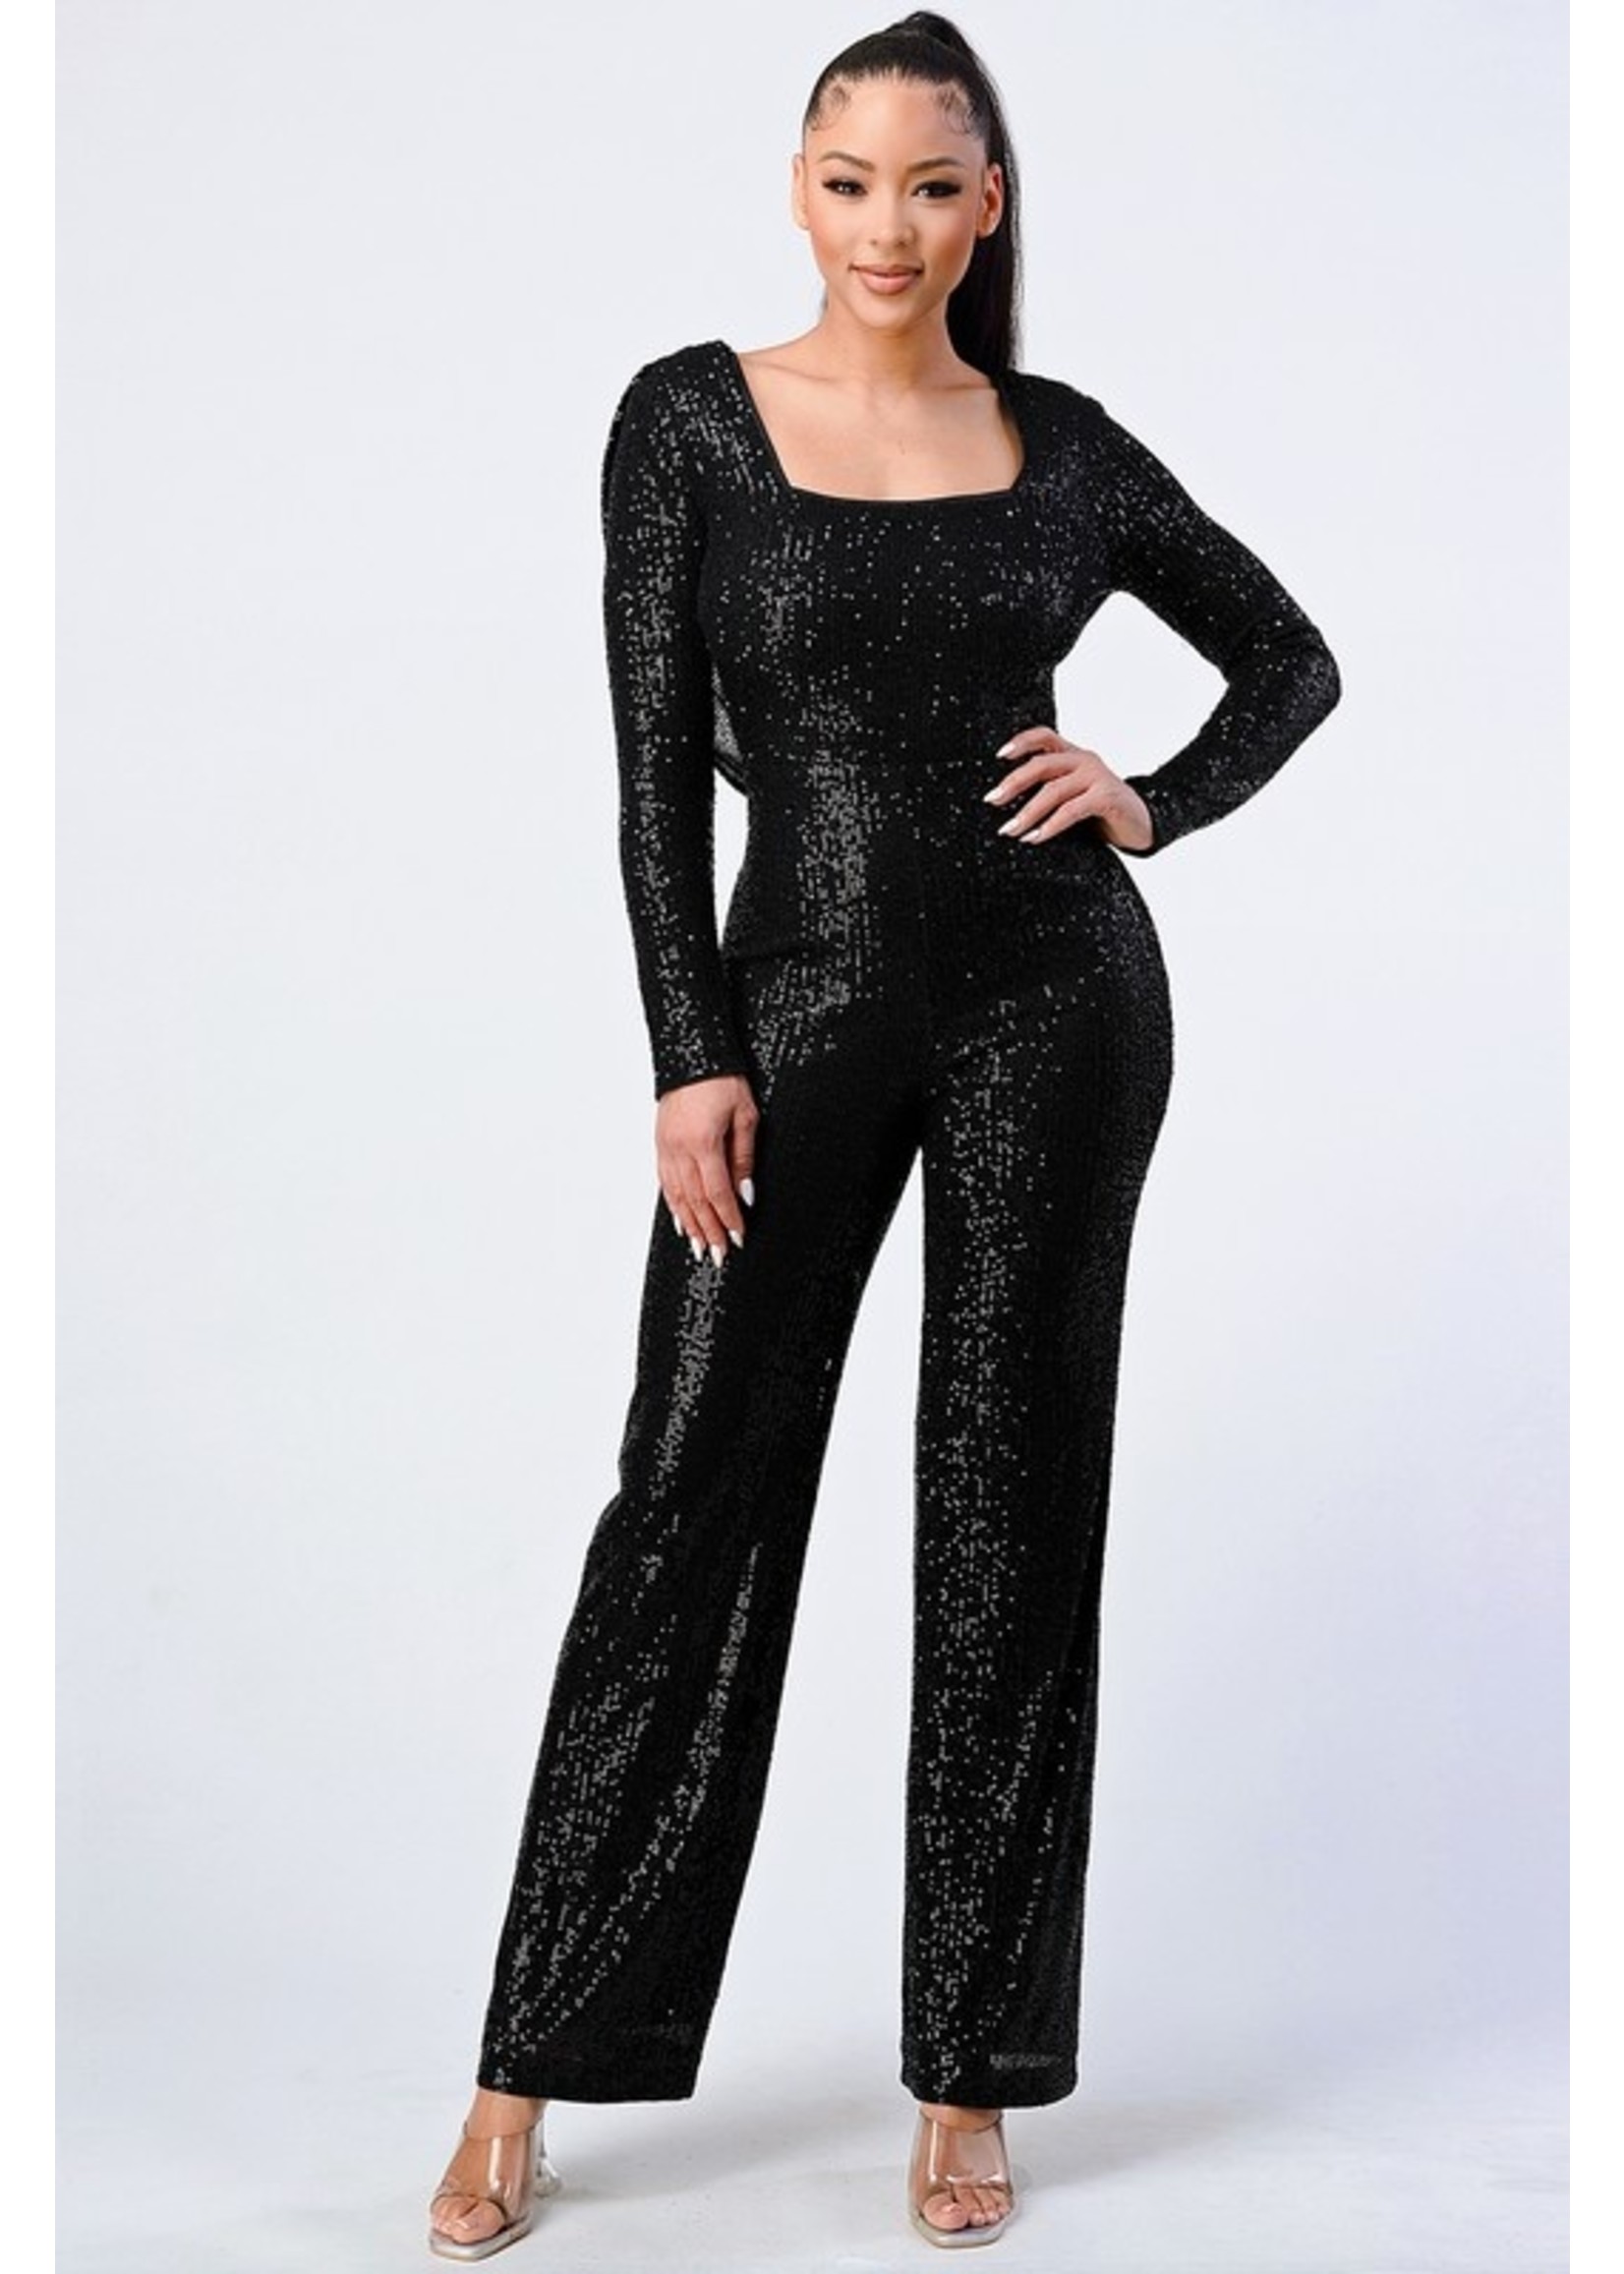 Privy Glitter & Glam Jumpsuit Black